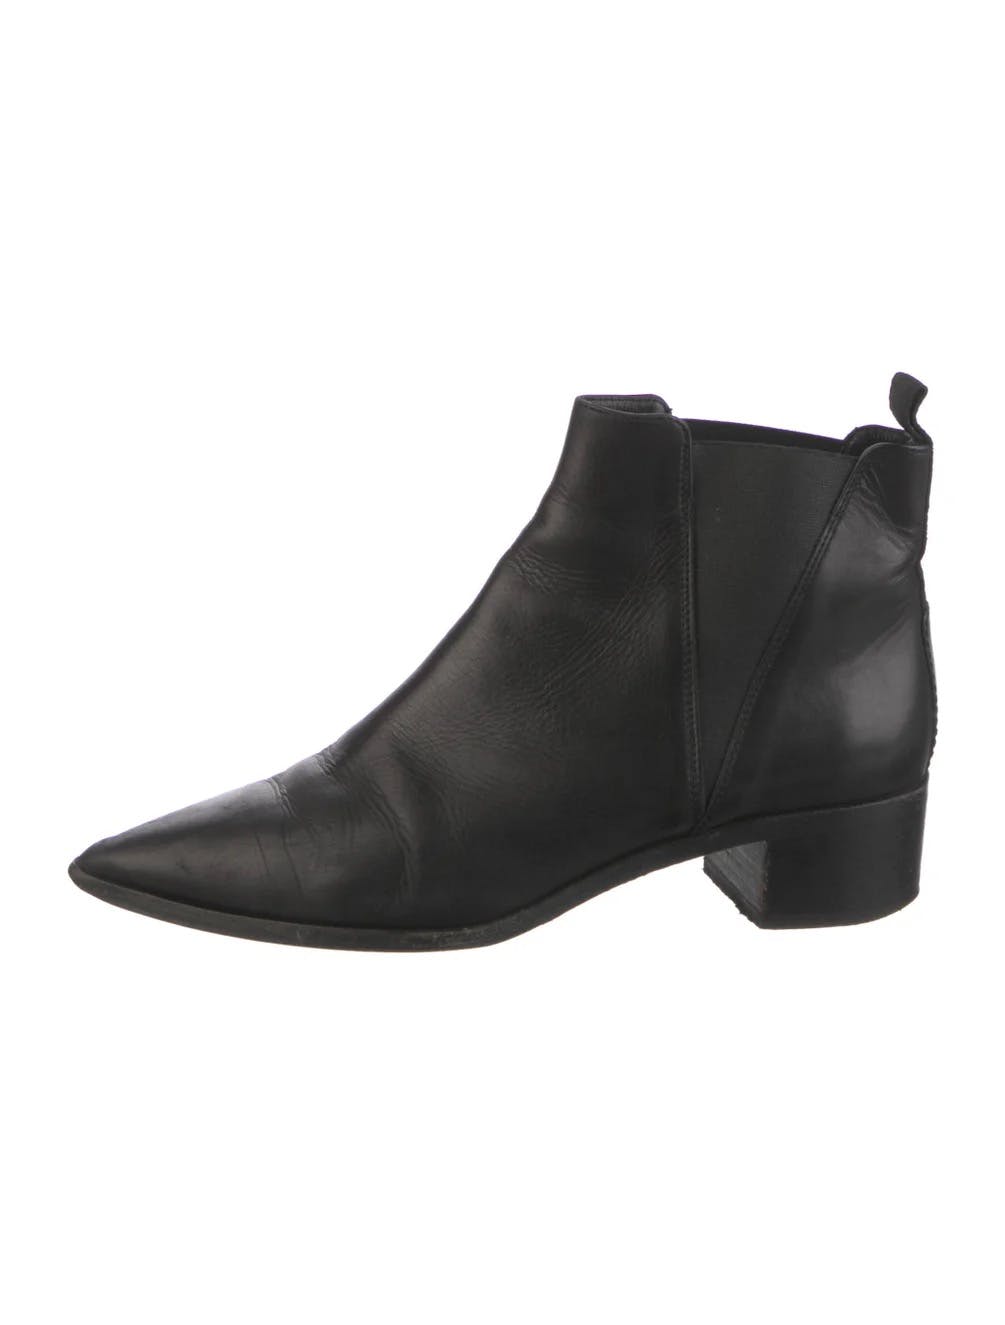 Leather Cuban heel boots - 1